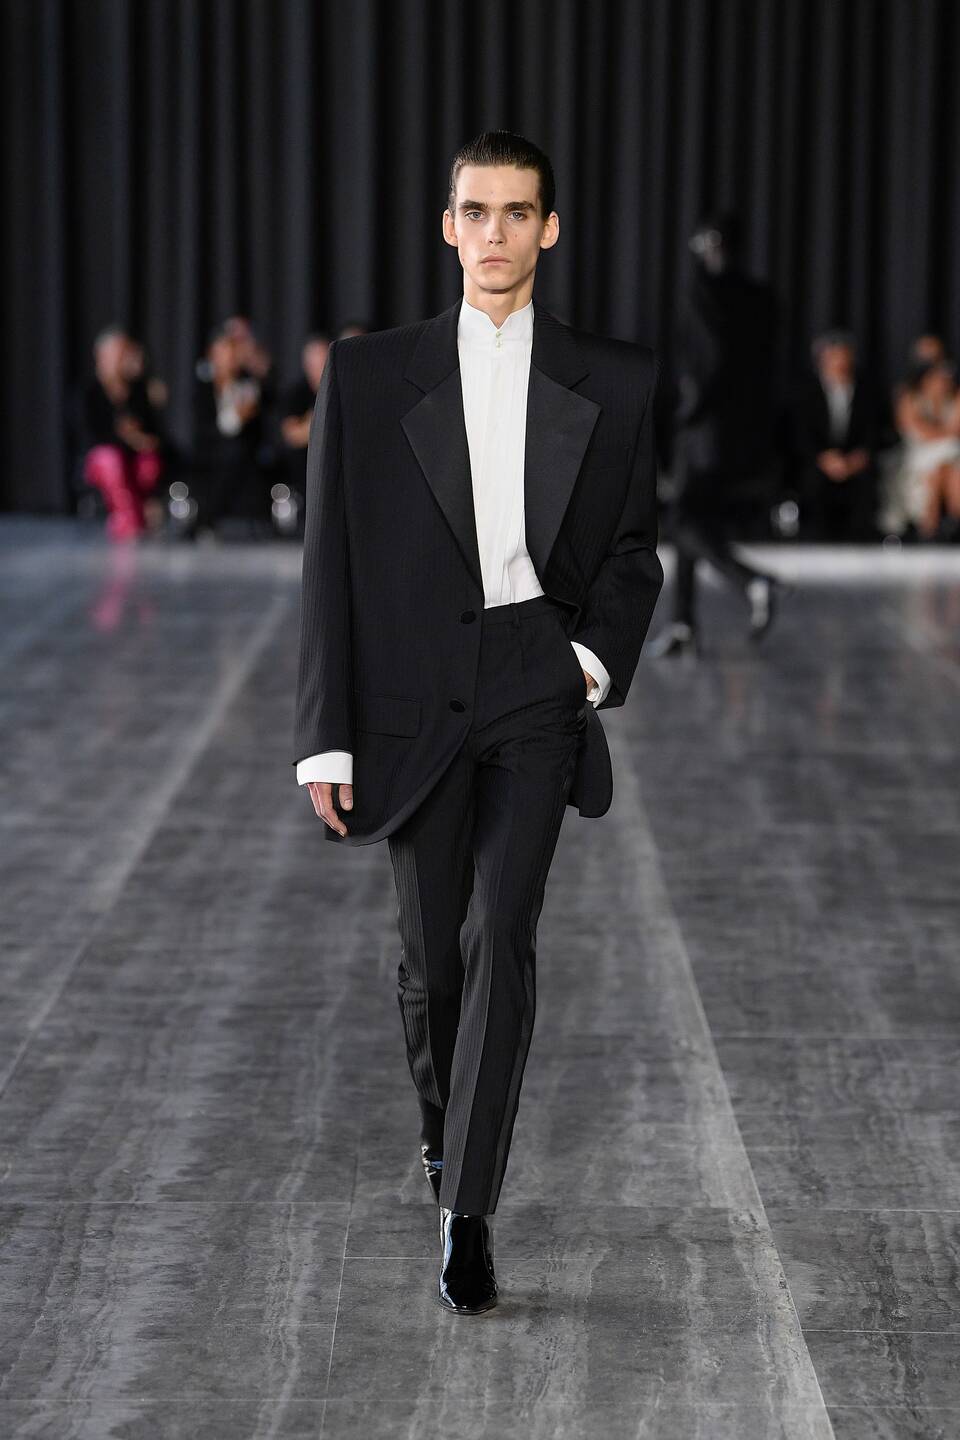 Yves Saint Laurent: Fashion's Maverick Legacy and Enduring Empowerment ...